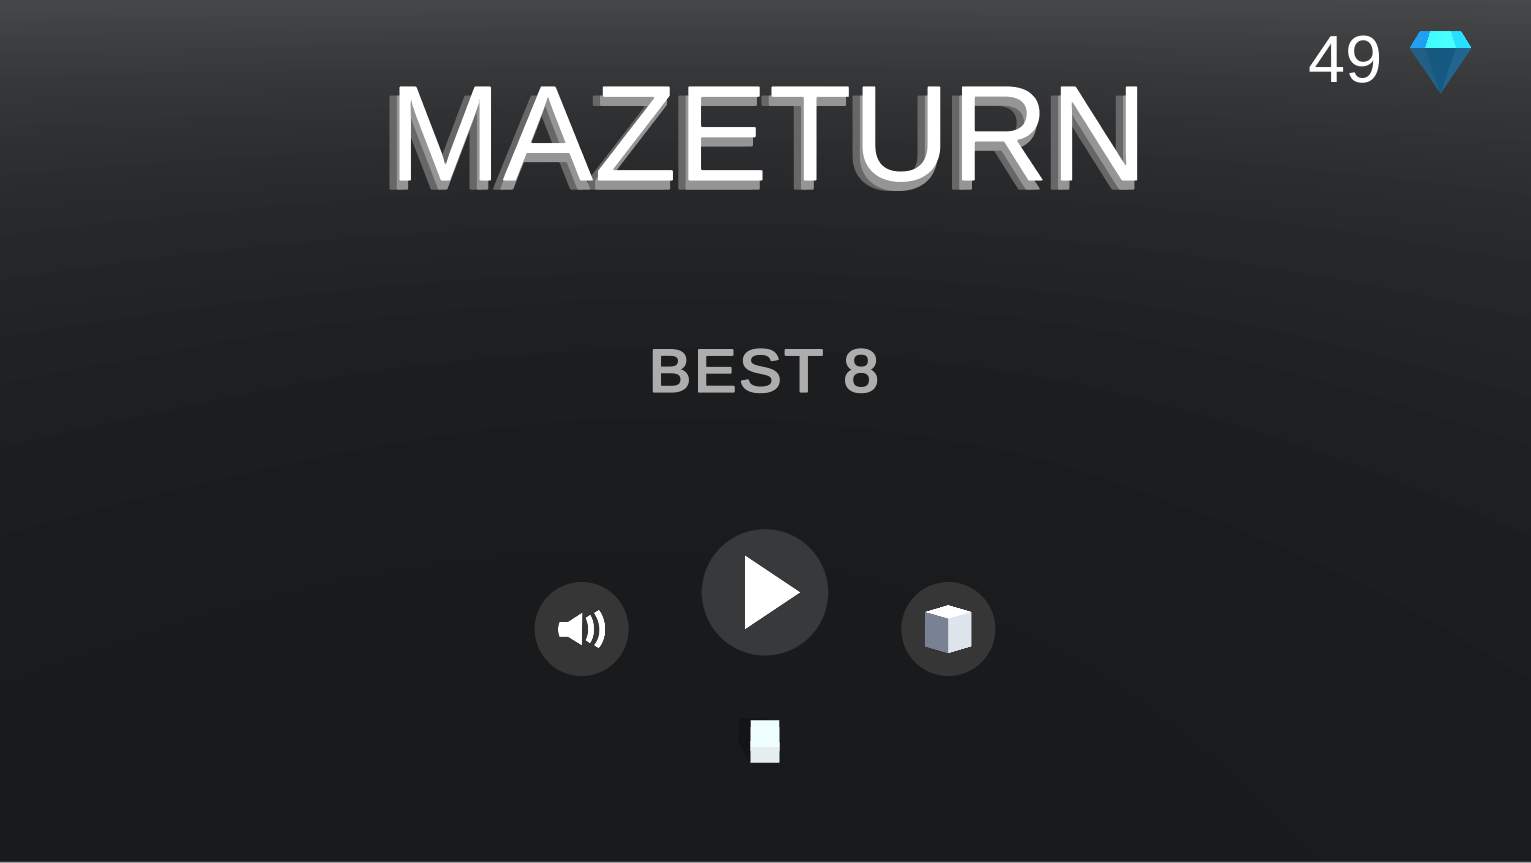 Mazeturn - Complete Unity Game